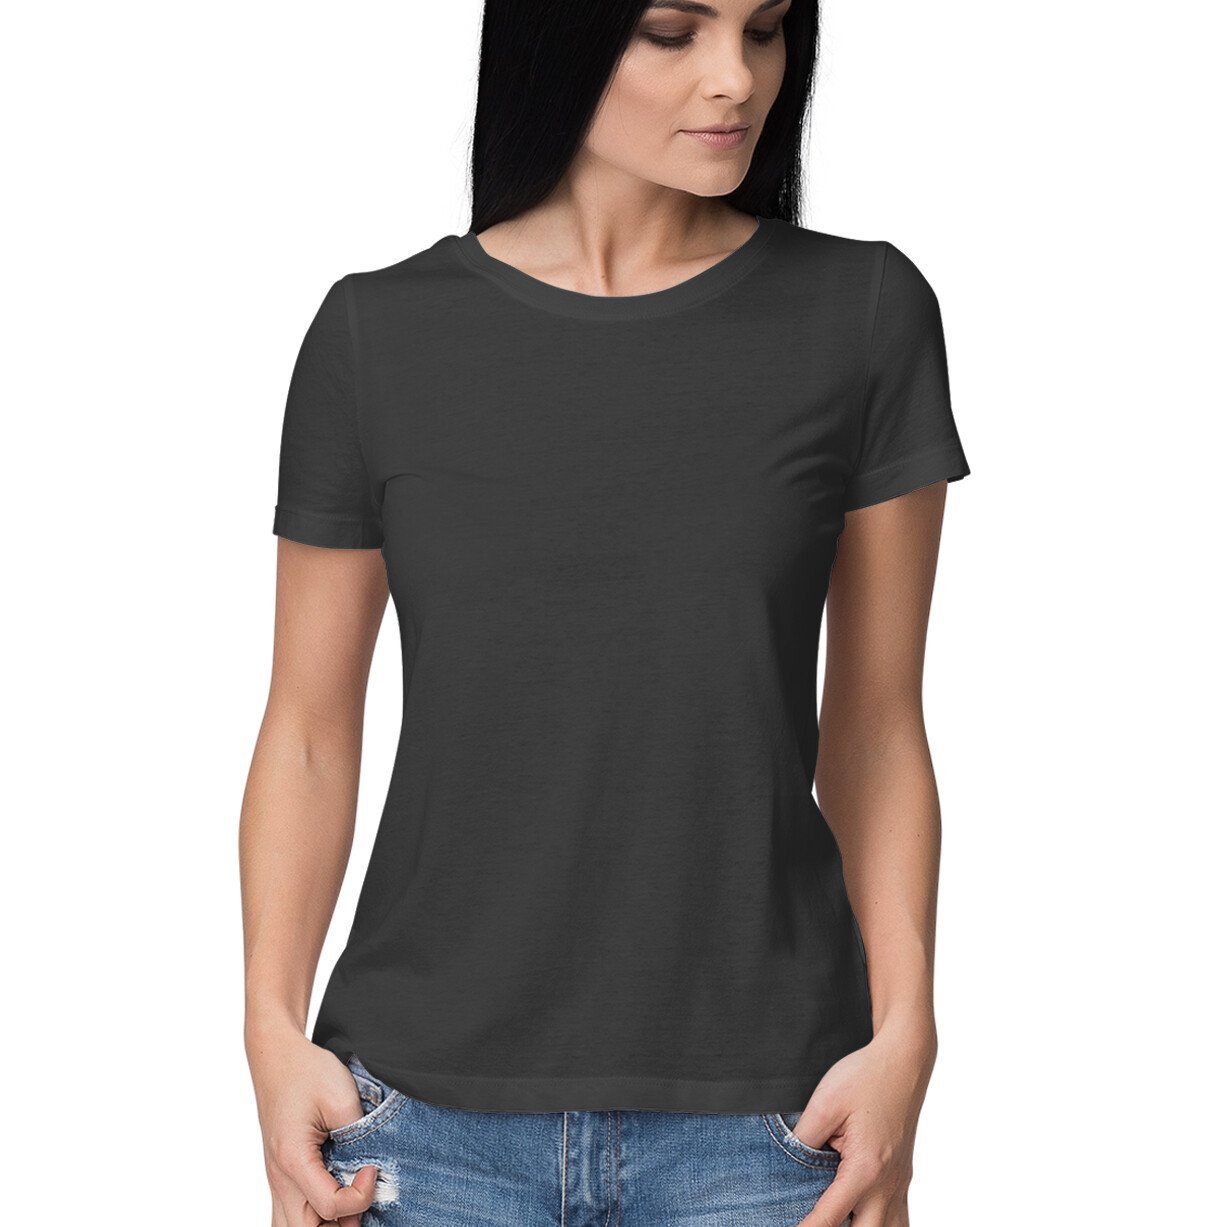 Black Half Sleeve T-Shirt - Insane Tees